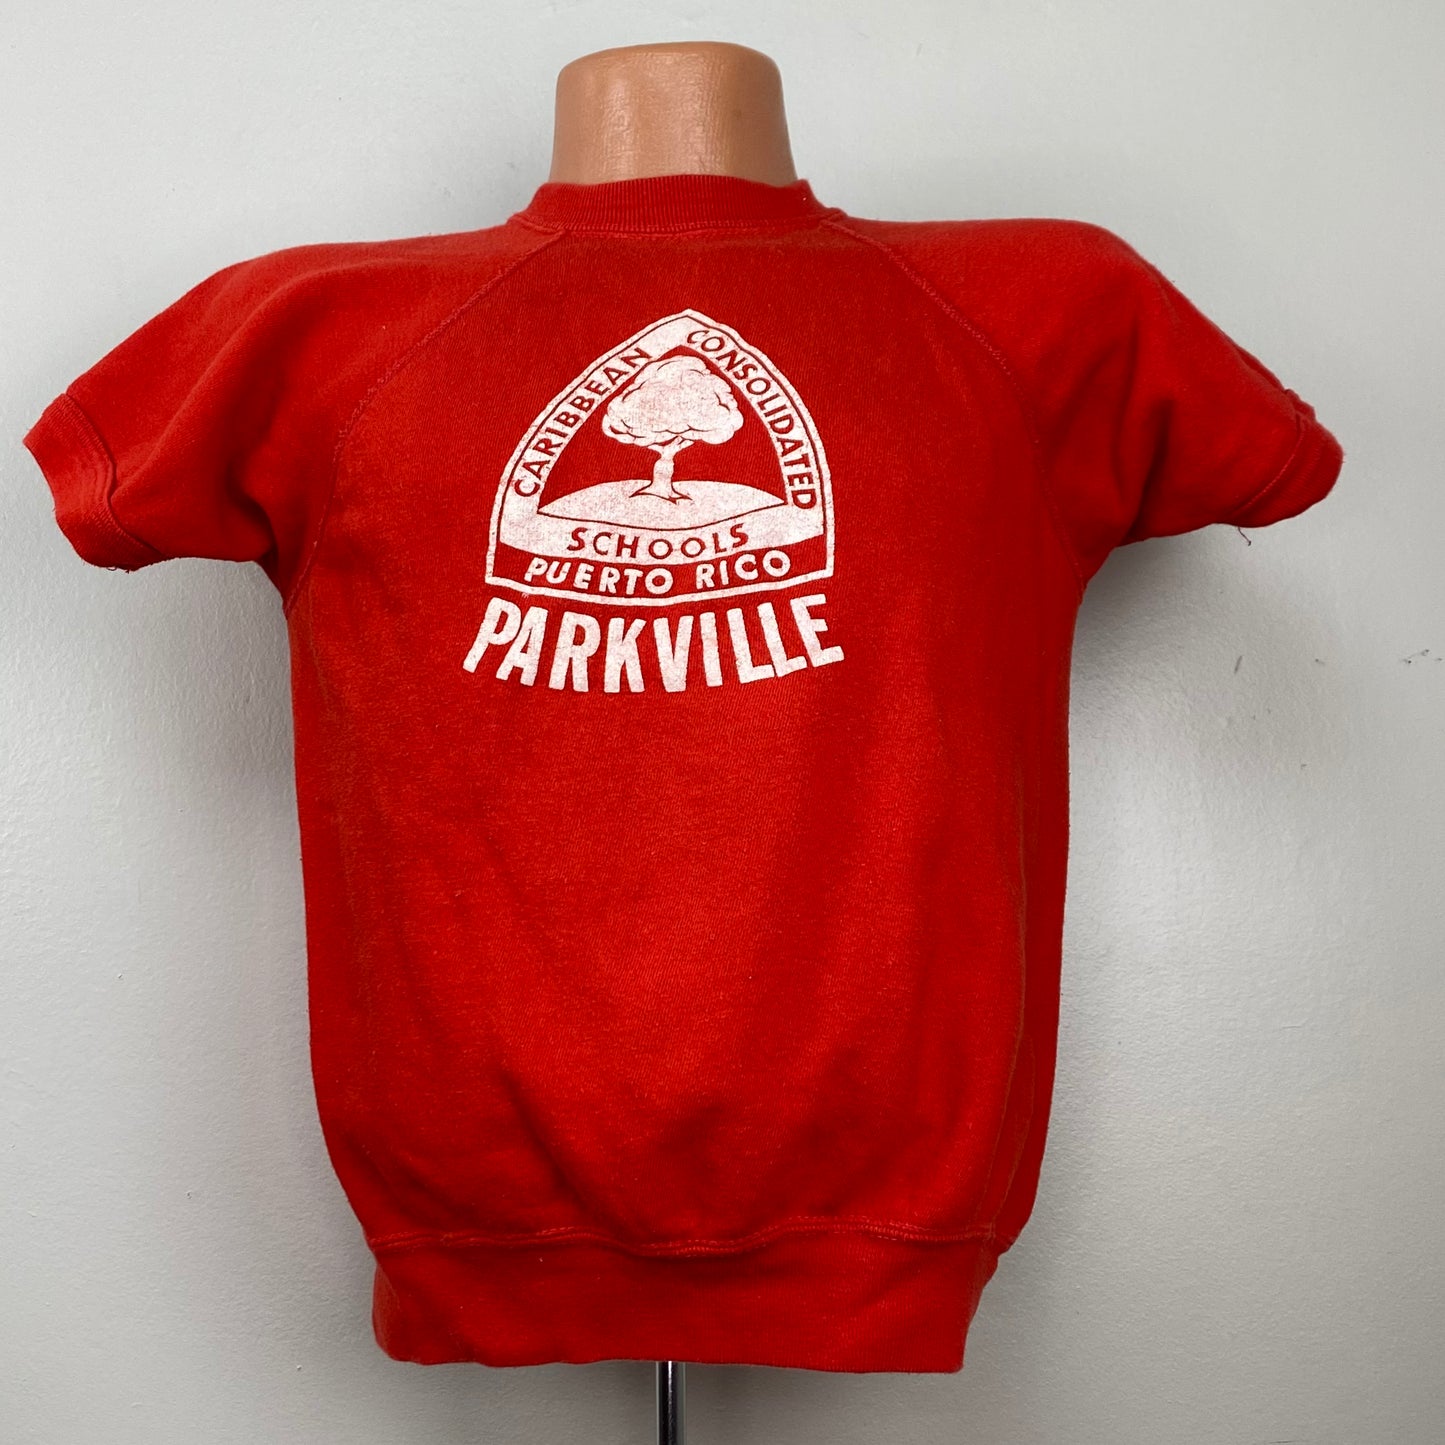 1970s Parkville Puerto Rico Short Sleeve Sweatshirt, Size Medium, Caribbean Consolidated Schools